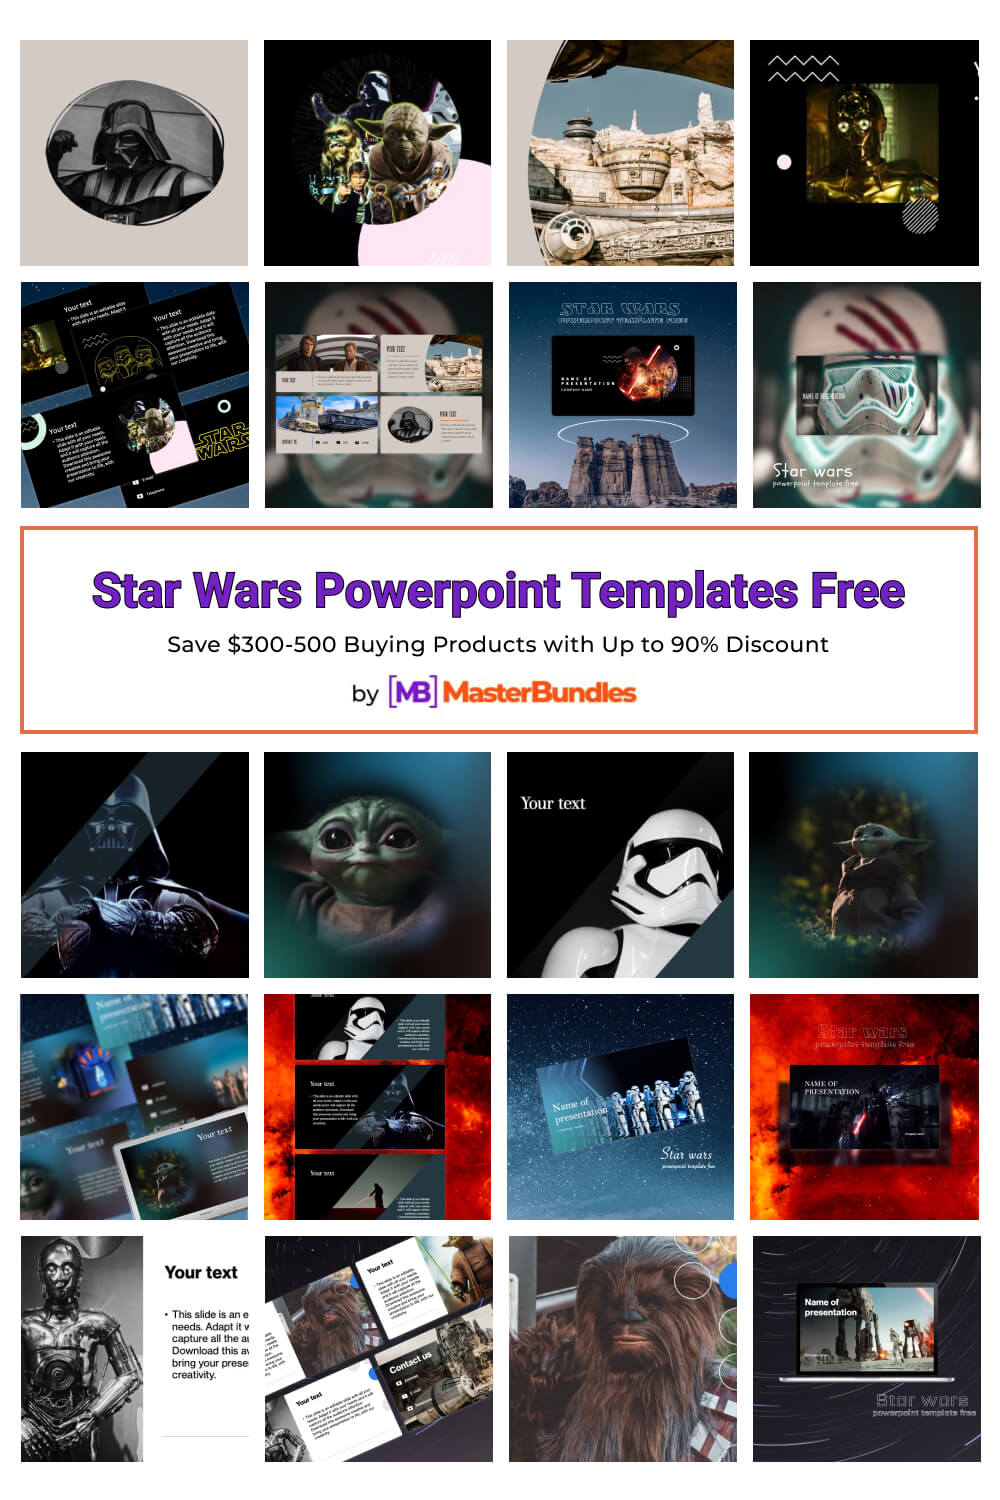 star wars powerpoint templates free pinterest image.